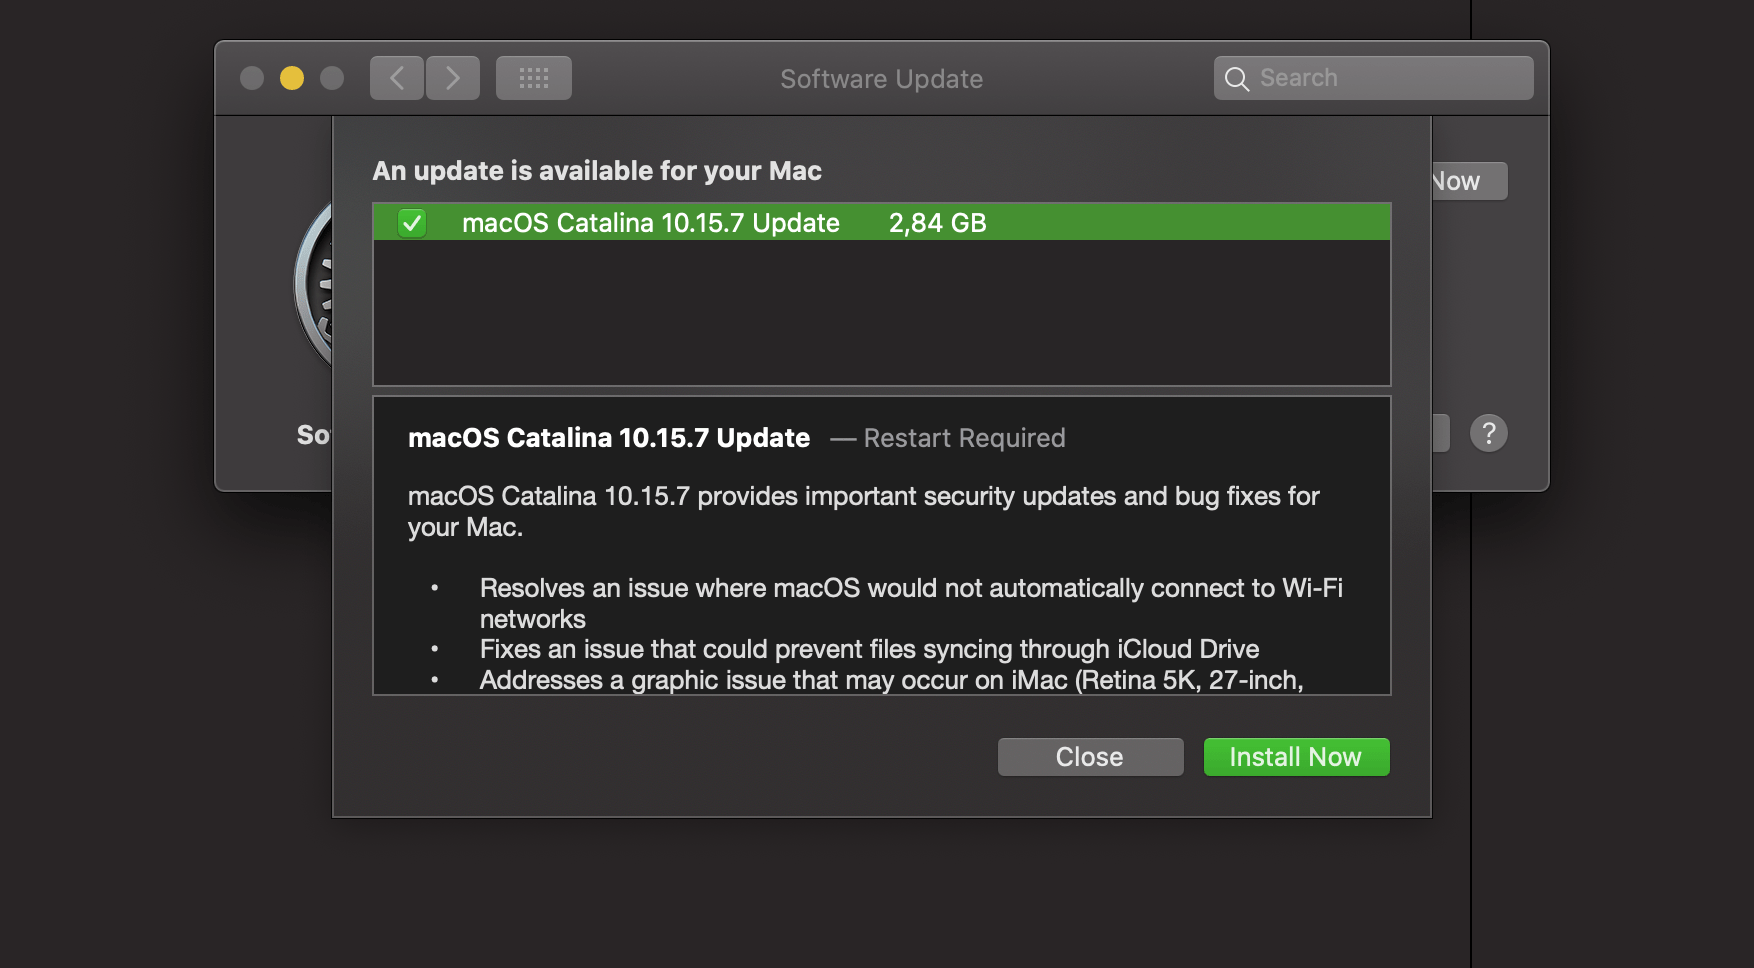 Update macOS Catalina 10.15.7